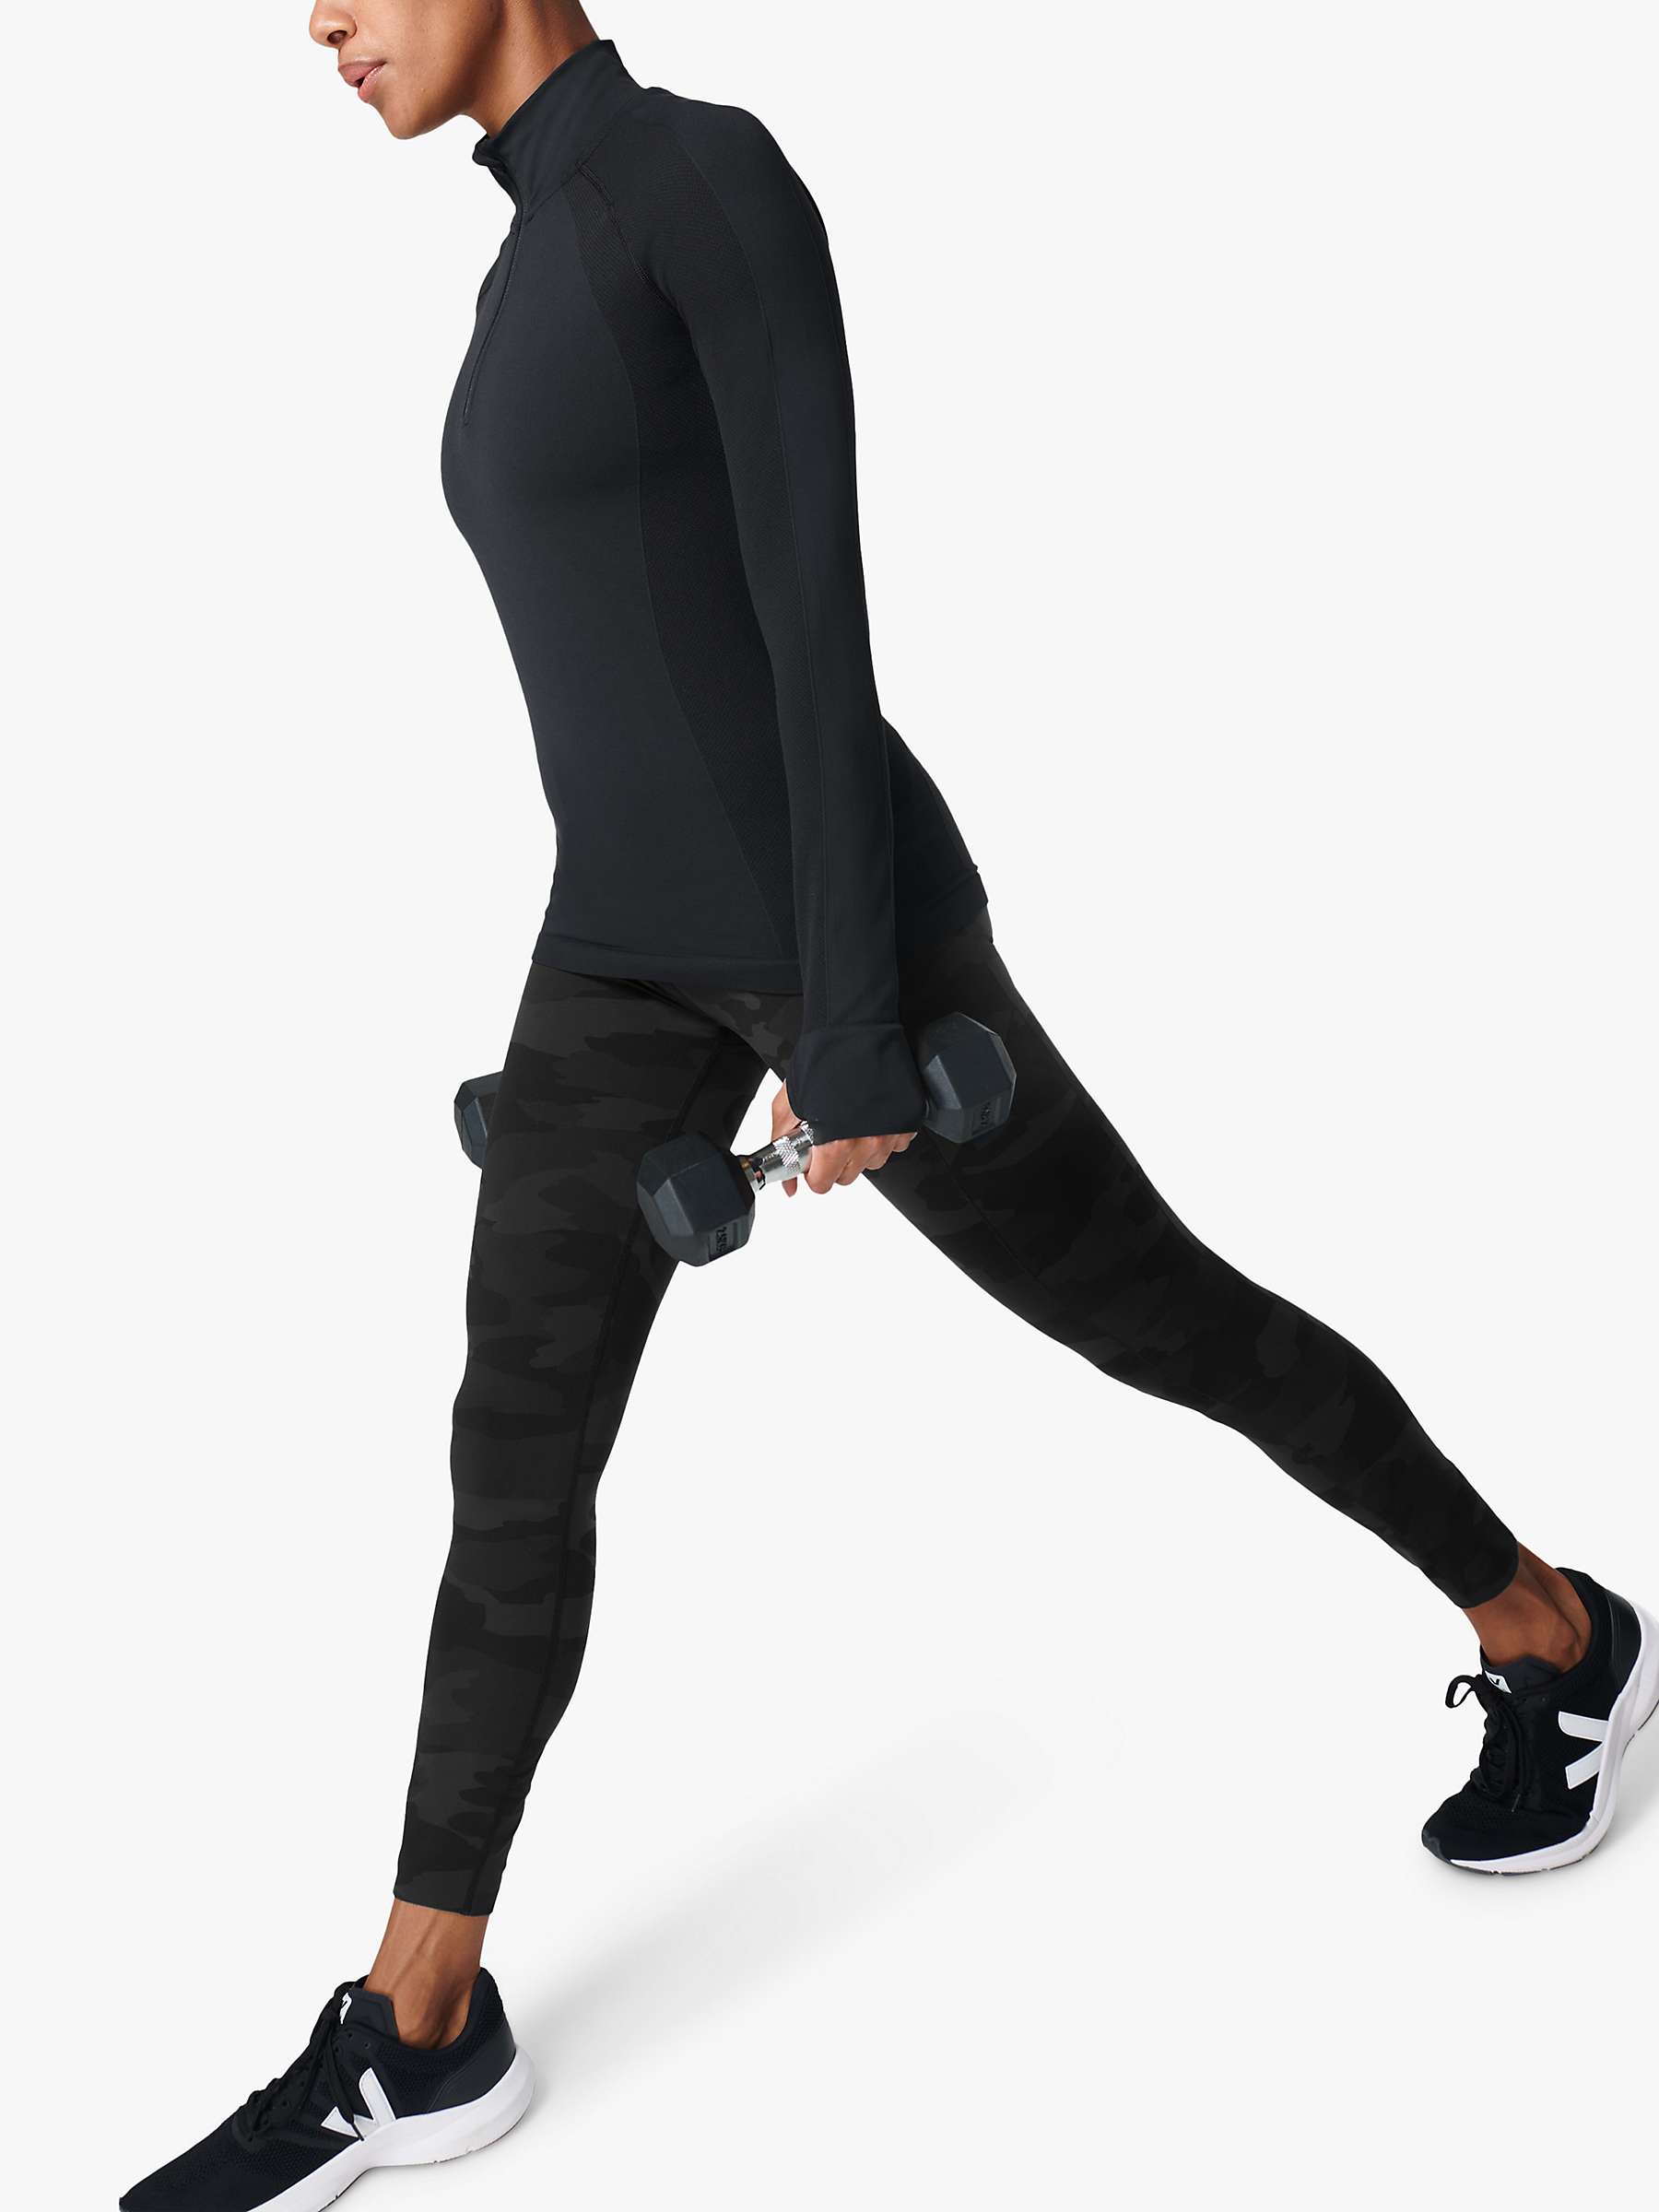 Buy Sweaty Betty Athlete Seamless Half Zip Long Sleeve Top Online at johnlewis.com